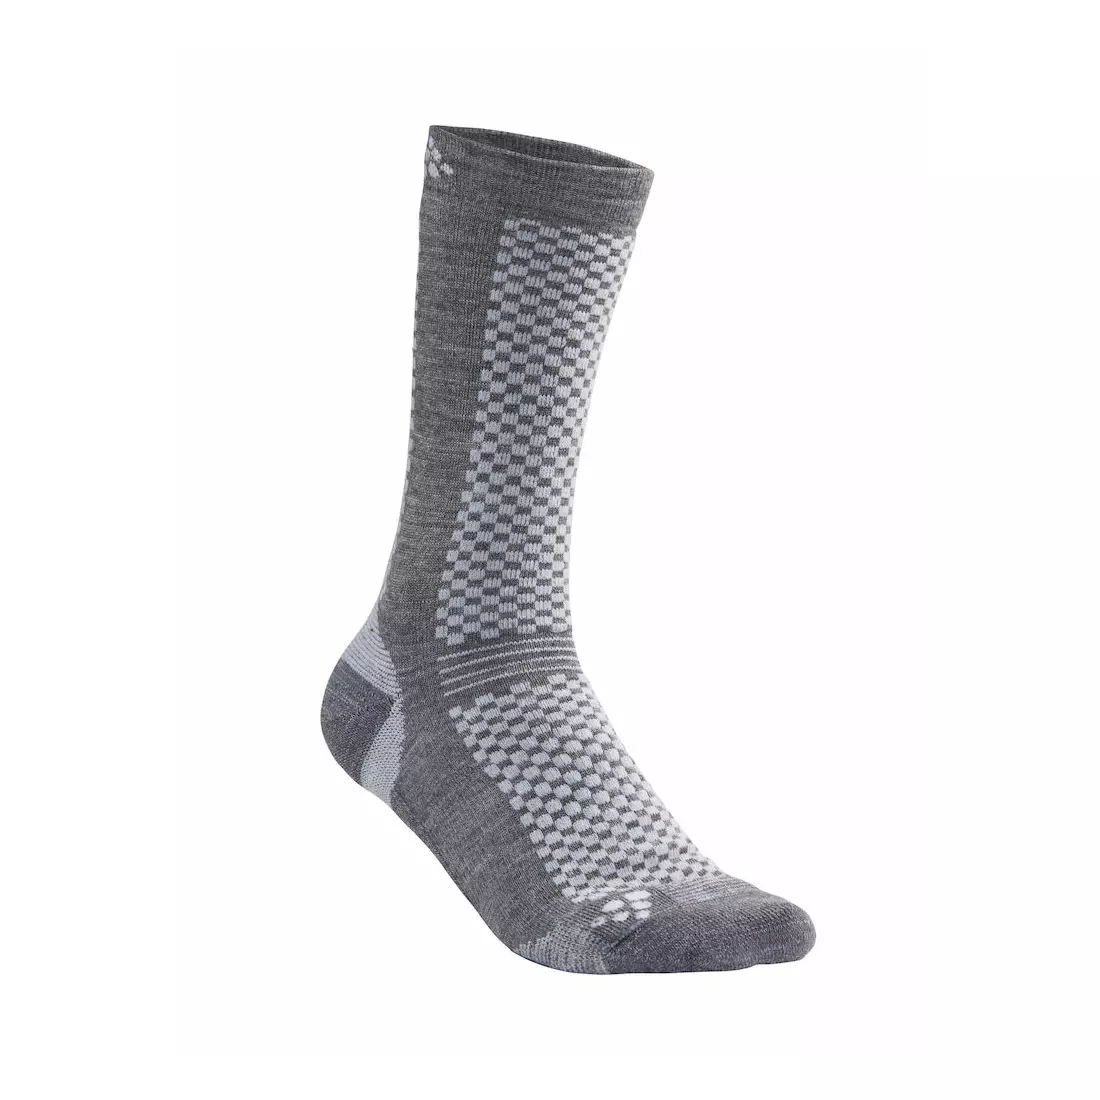 CRAFT WARM WOOL MID 1905544-985920 socks 2-pack gray